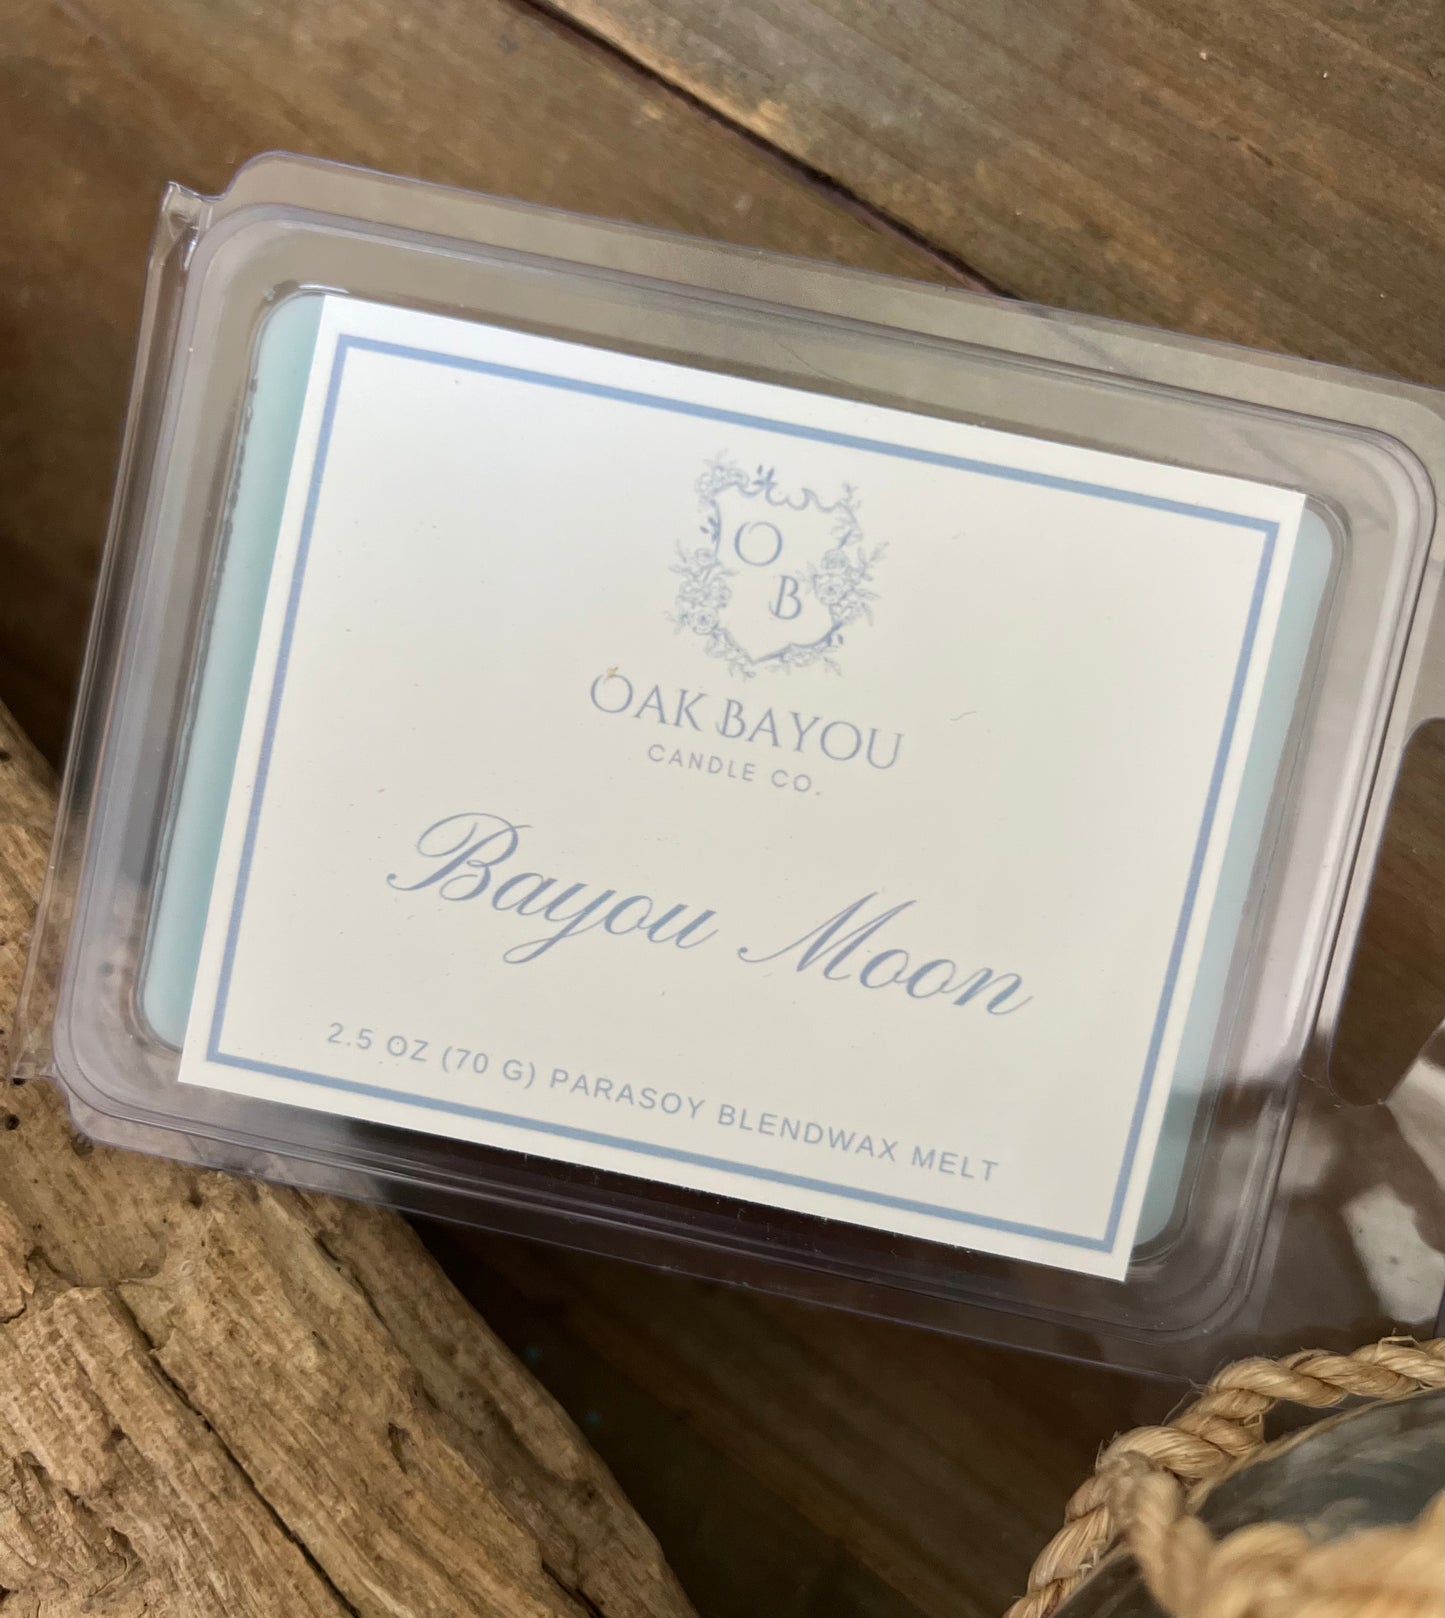 Bayou Moon Wax Melt – Oak Bayou Candle Co.